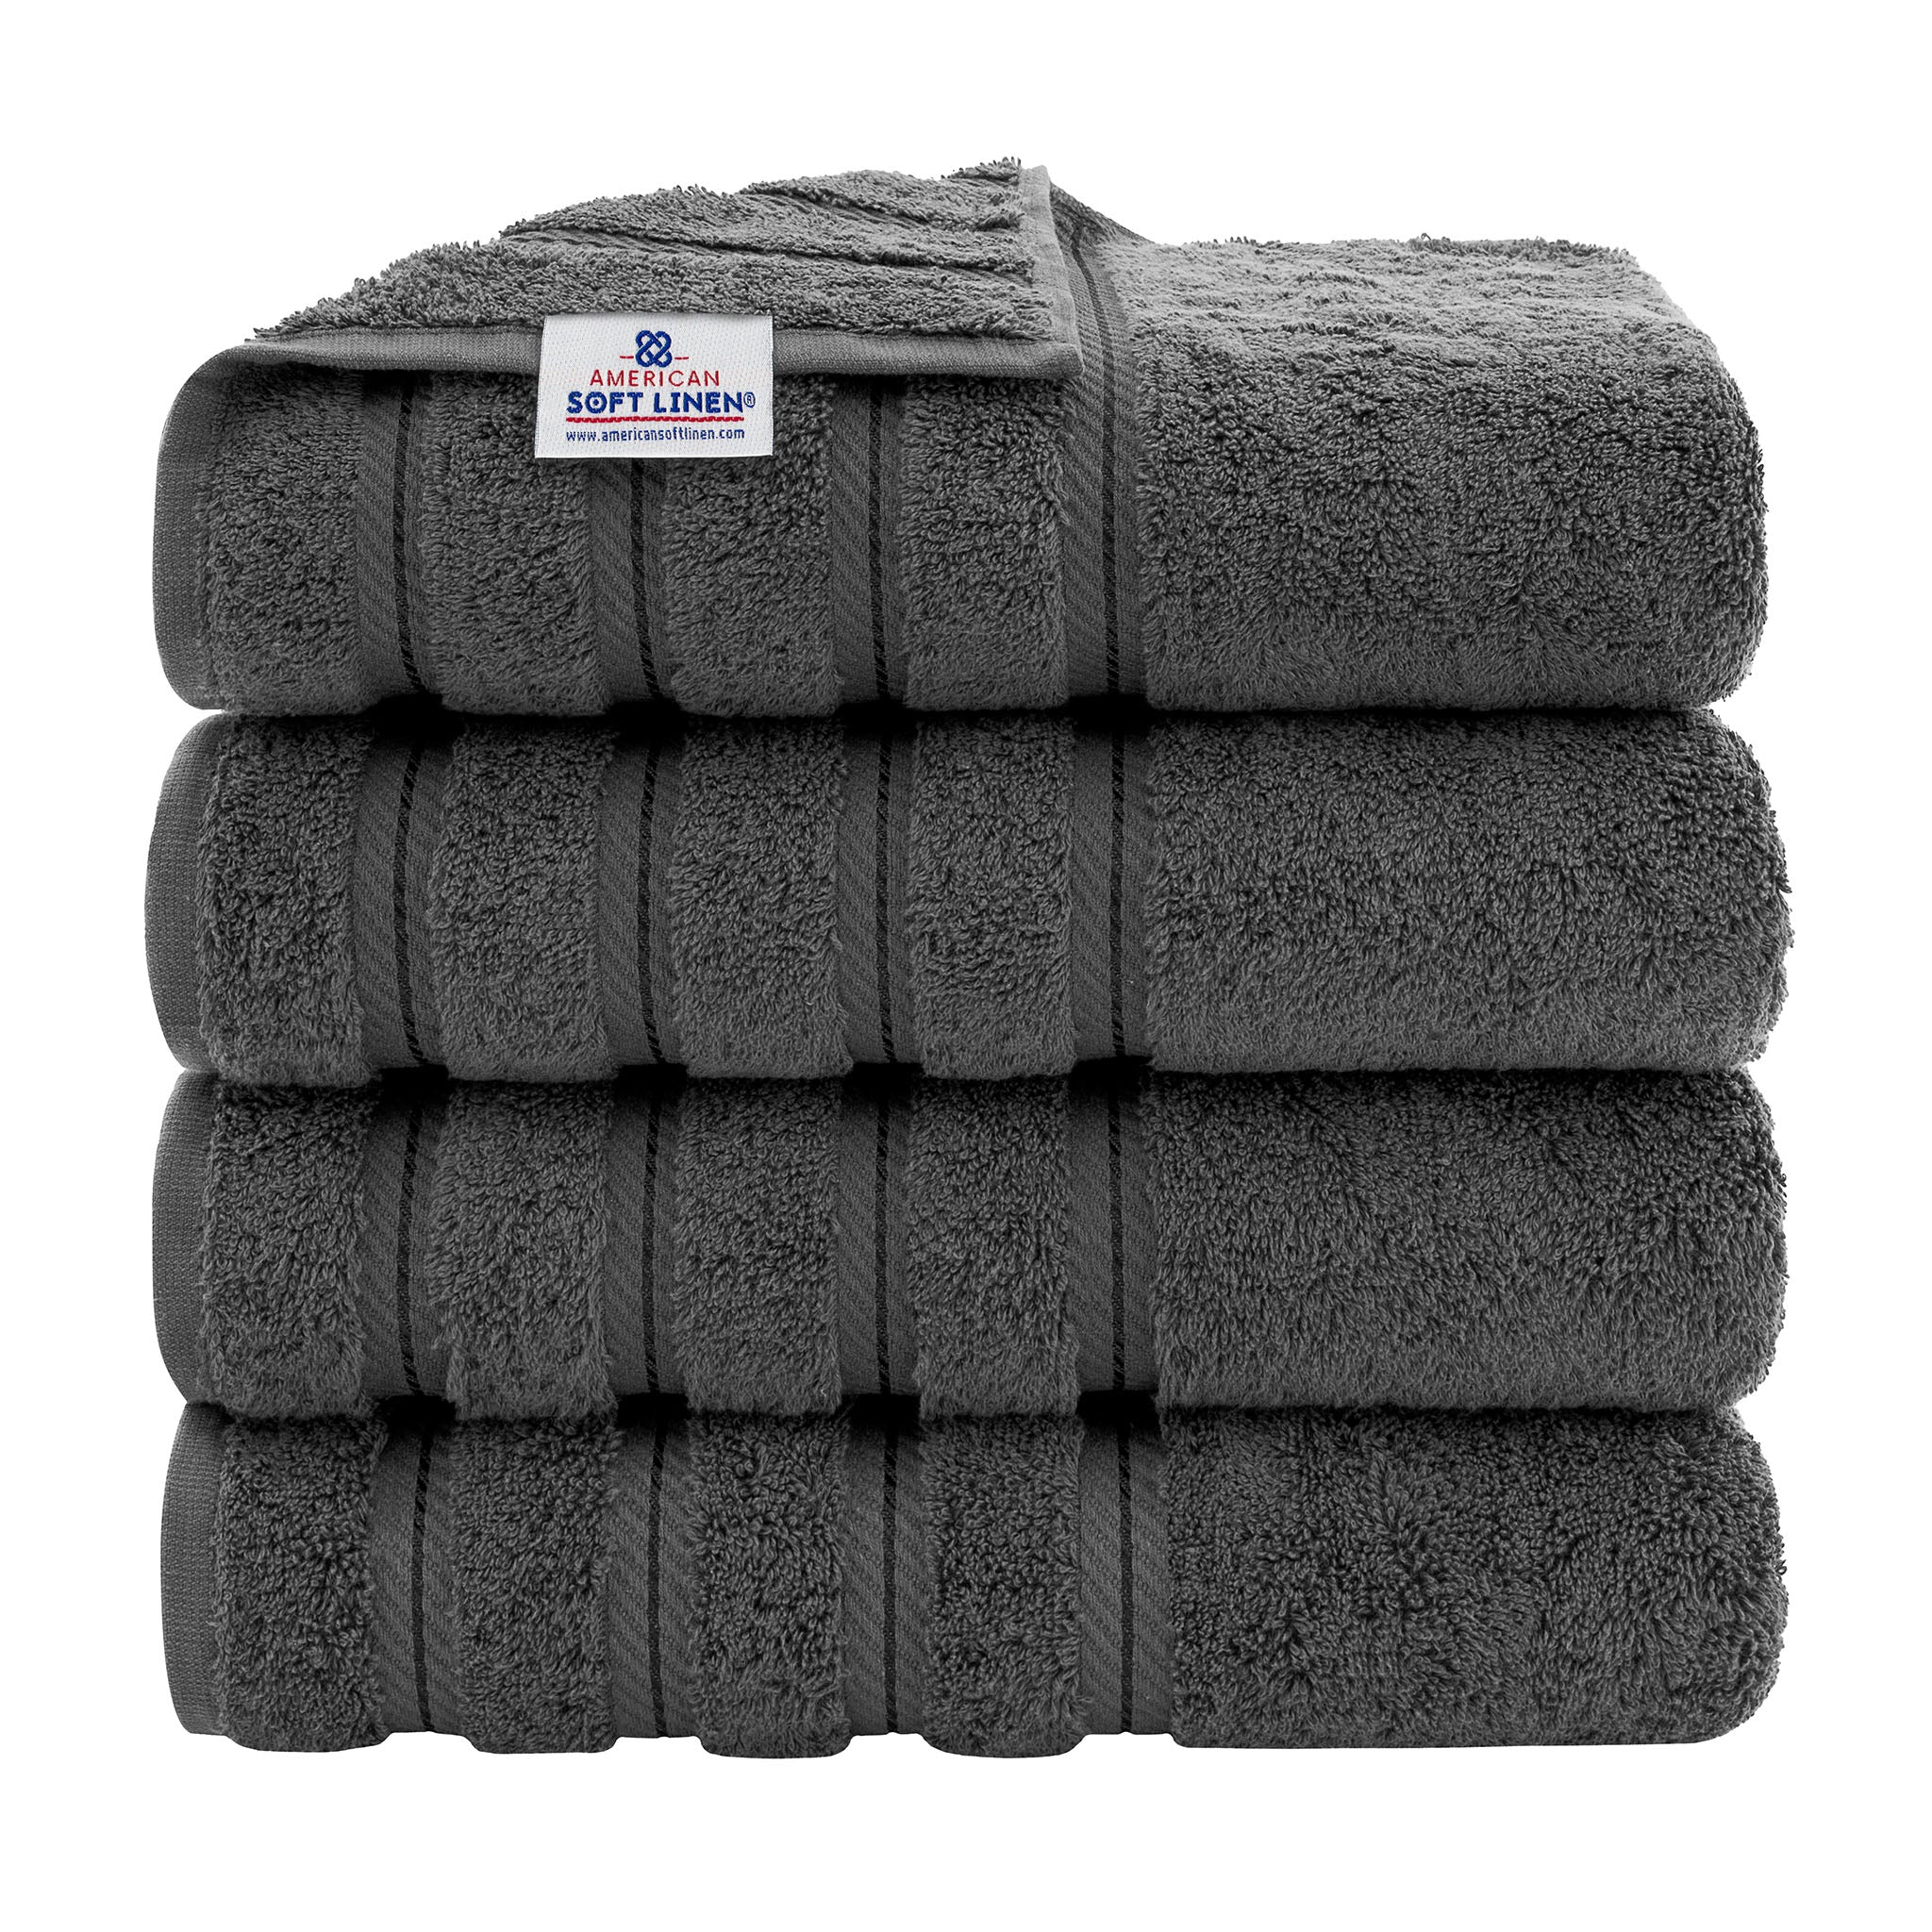 American Soft Linen 100% Turkish Cotton 4 Pack Bath Towel Set Wholesale  gray-1